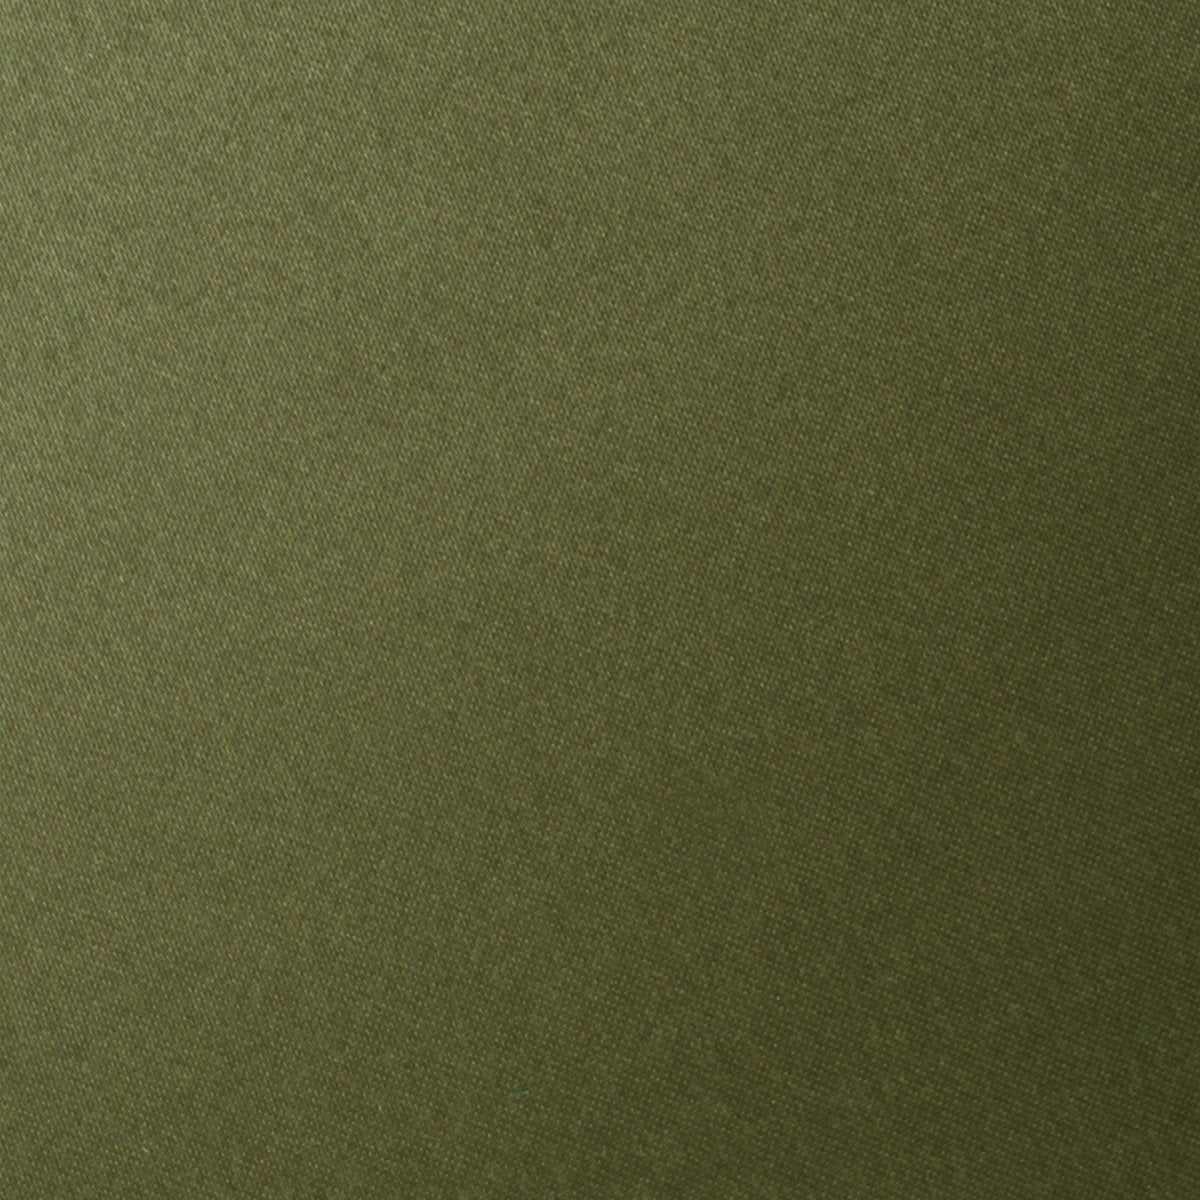 Olive Green Satin Pocket Square Fabric